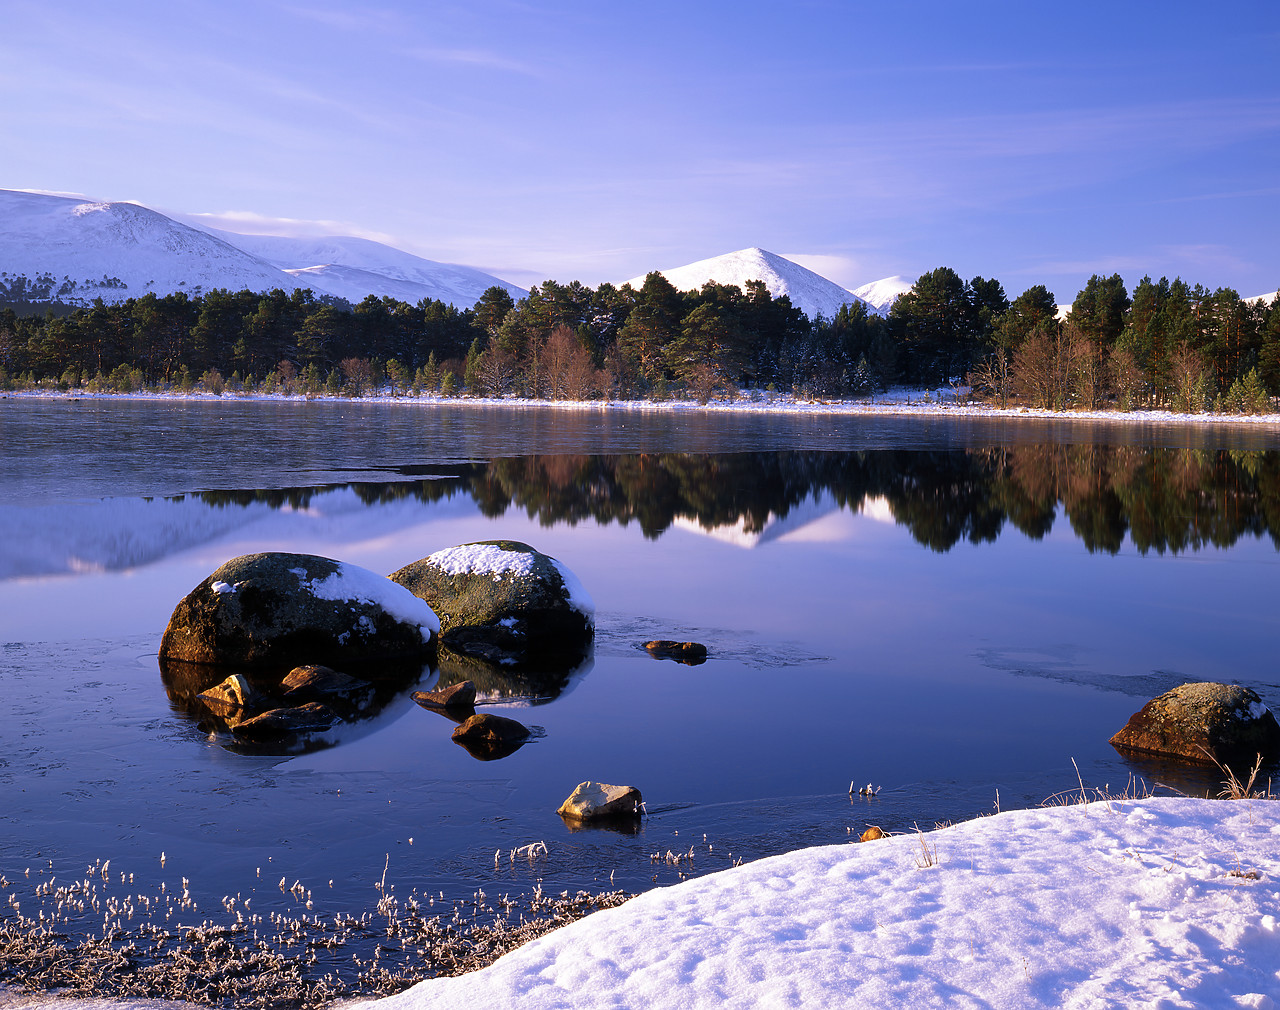 #990048-2 - Loch Morlich in Winter, Aviemore, Scotland